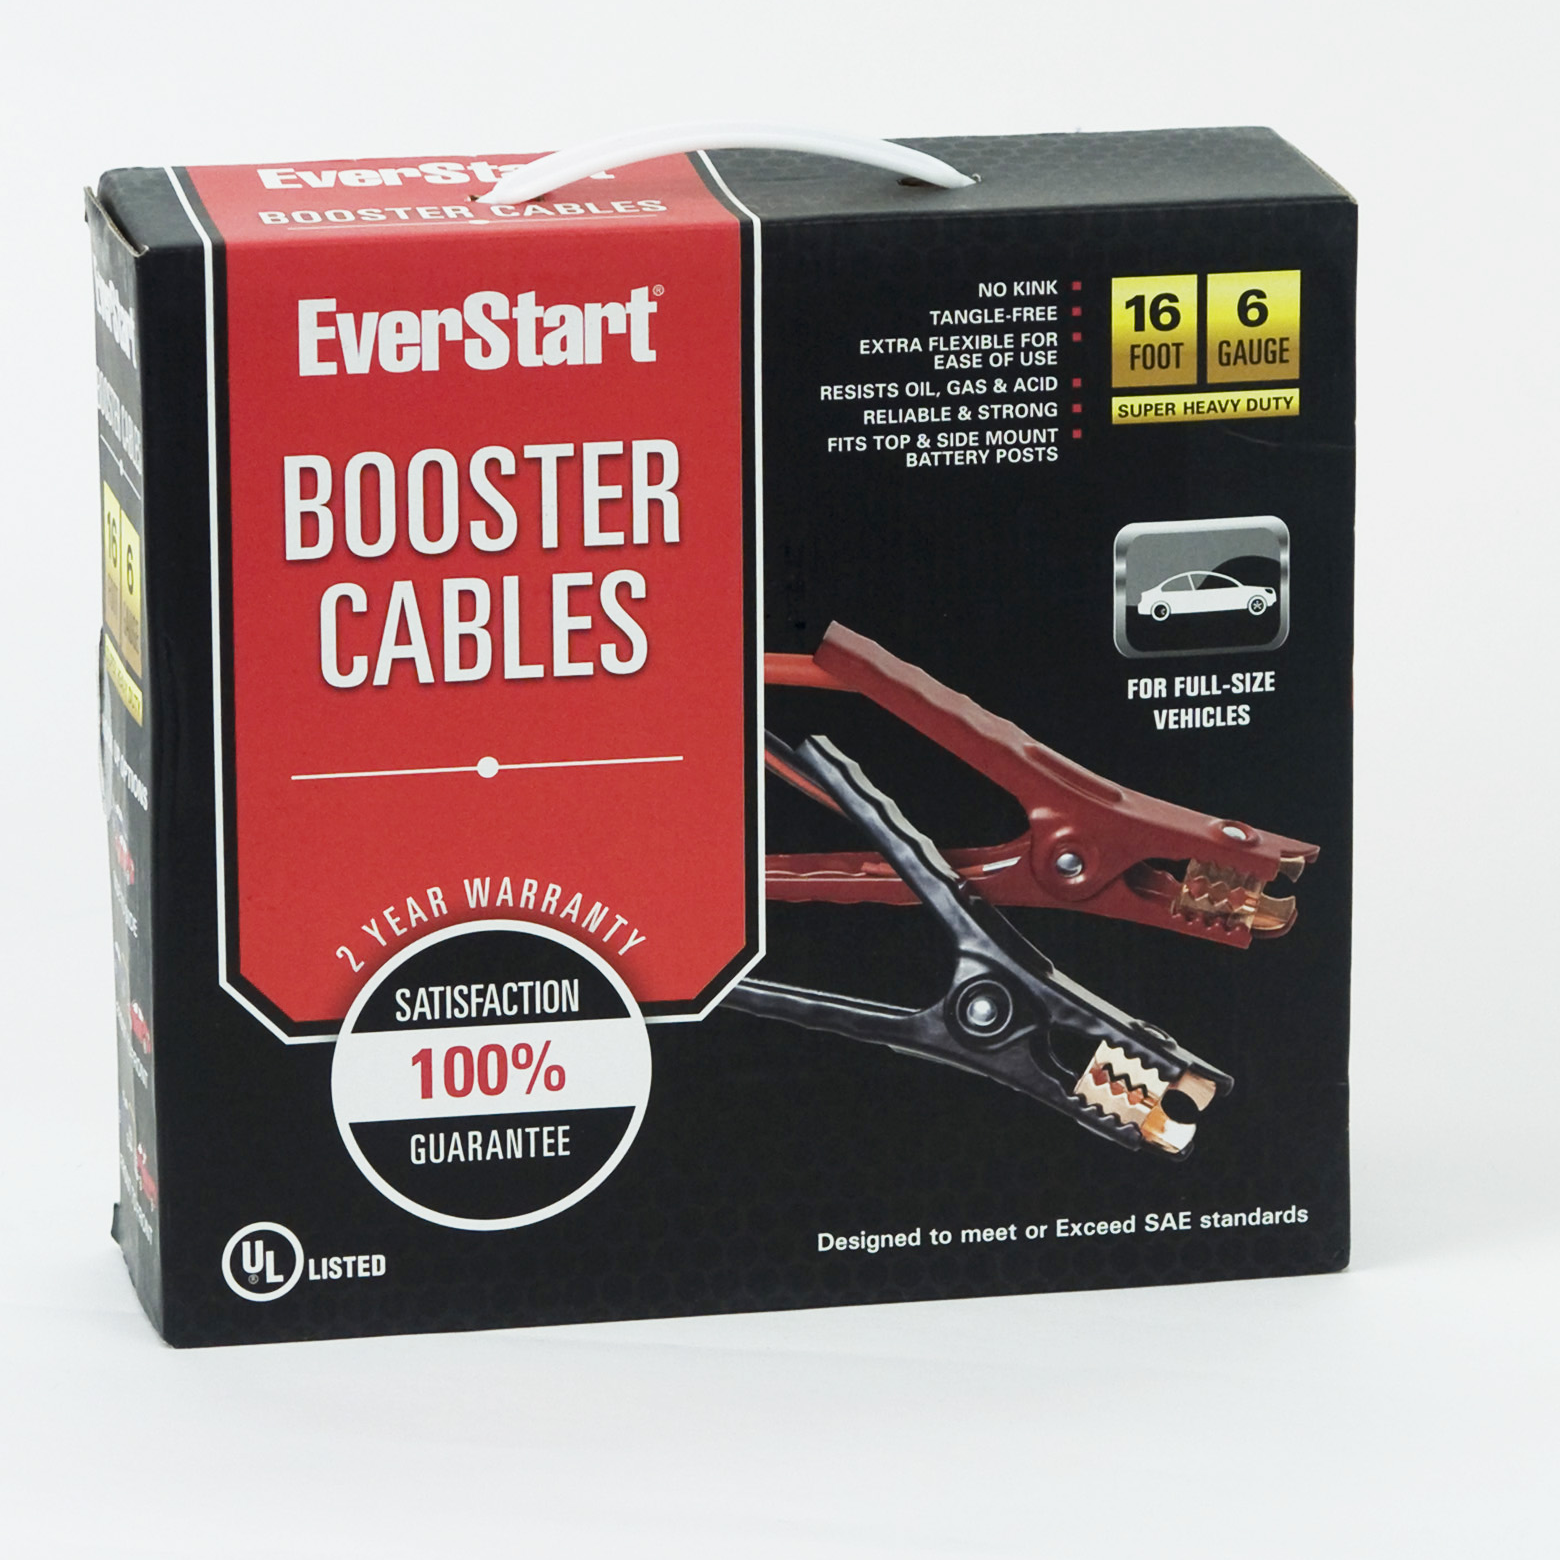 Everstart 16 Foot 6 Gauge Booster Cables Only $9.99!